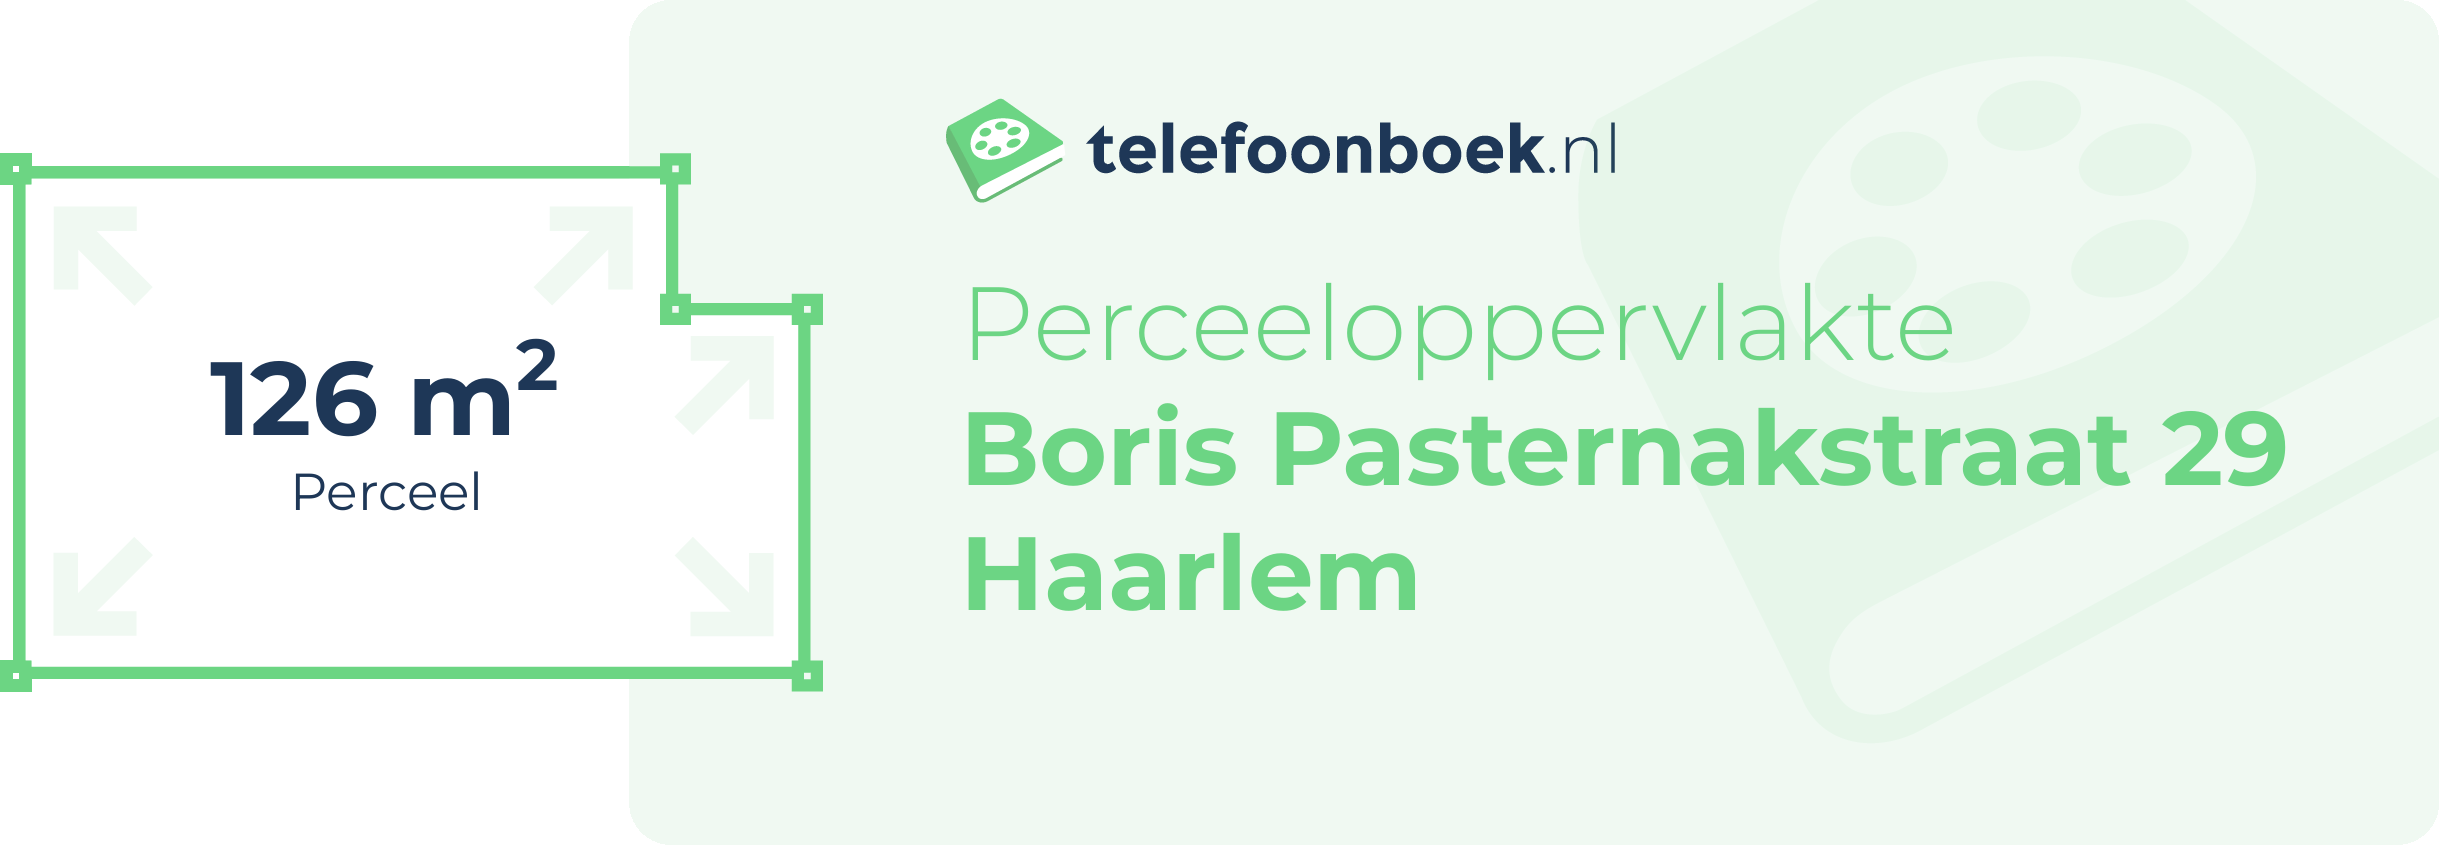 Perceeloppervlakte Boris Pasternakstraat 29 Haarlem